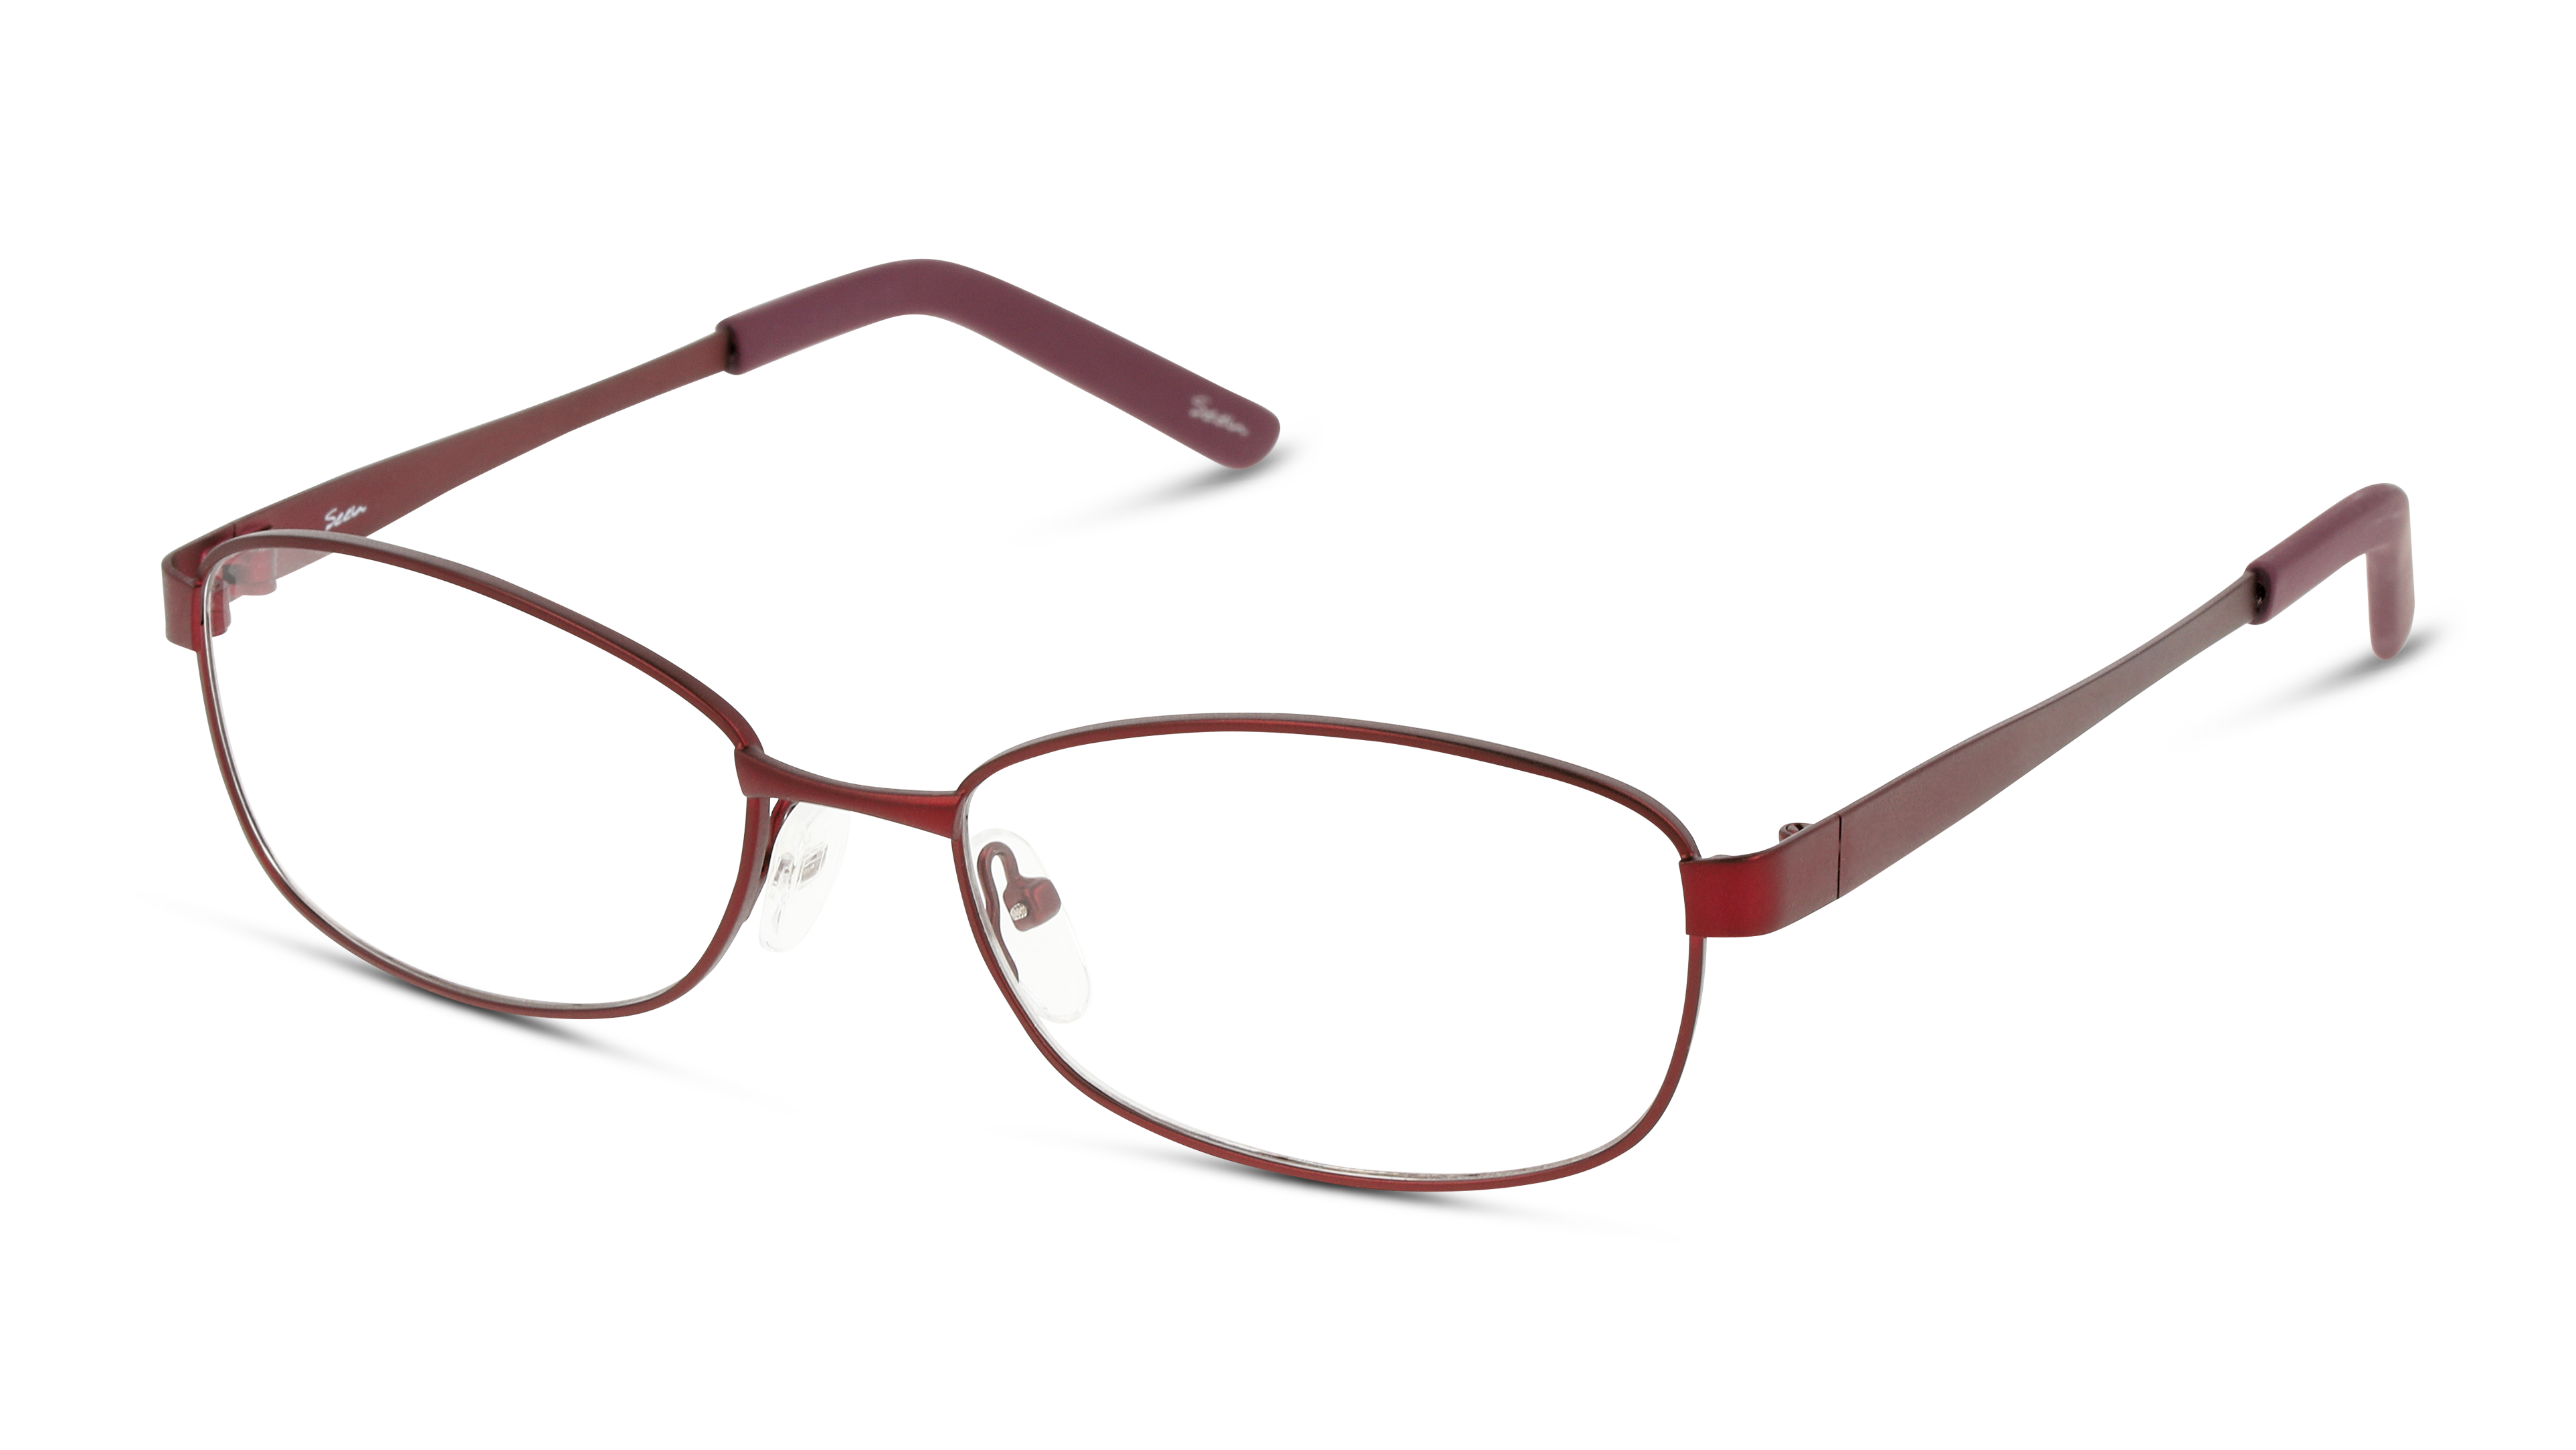 Angle_Left01 Seen SN EF05 (UU00) Glasses Transparent / Burgundy